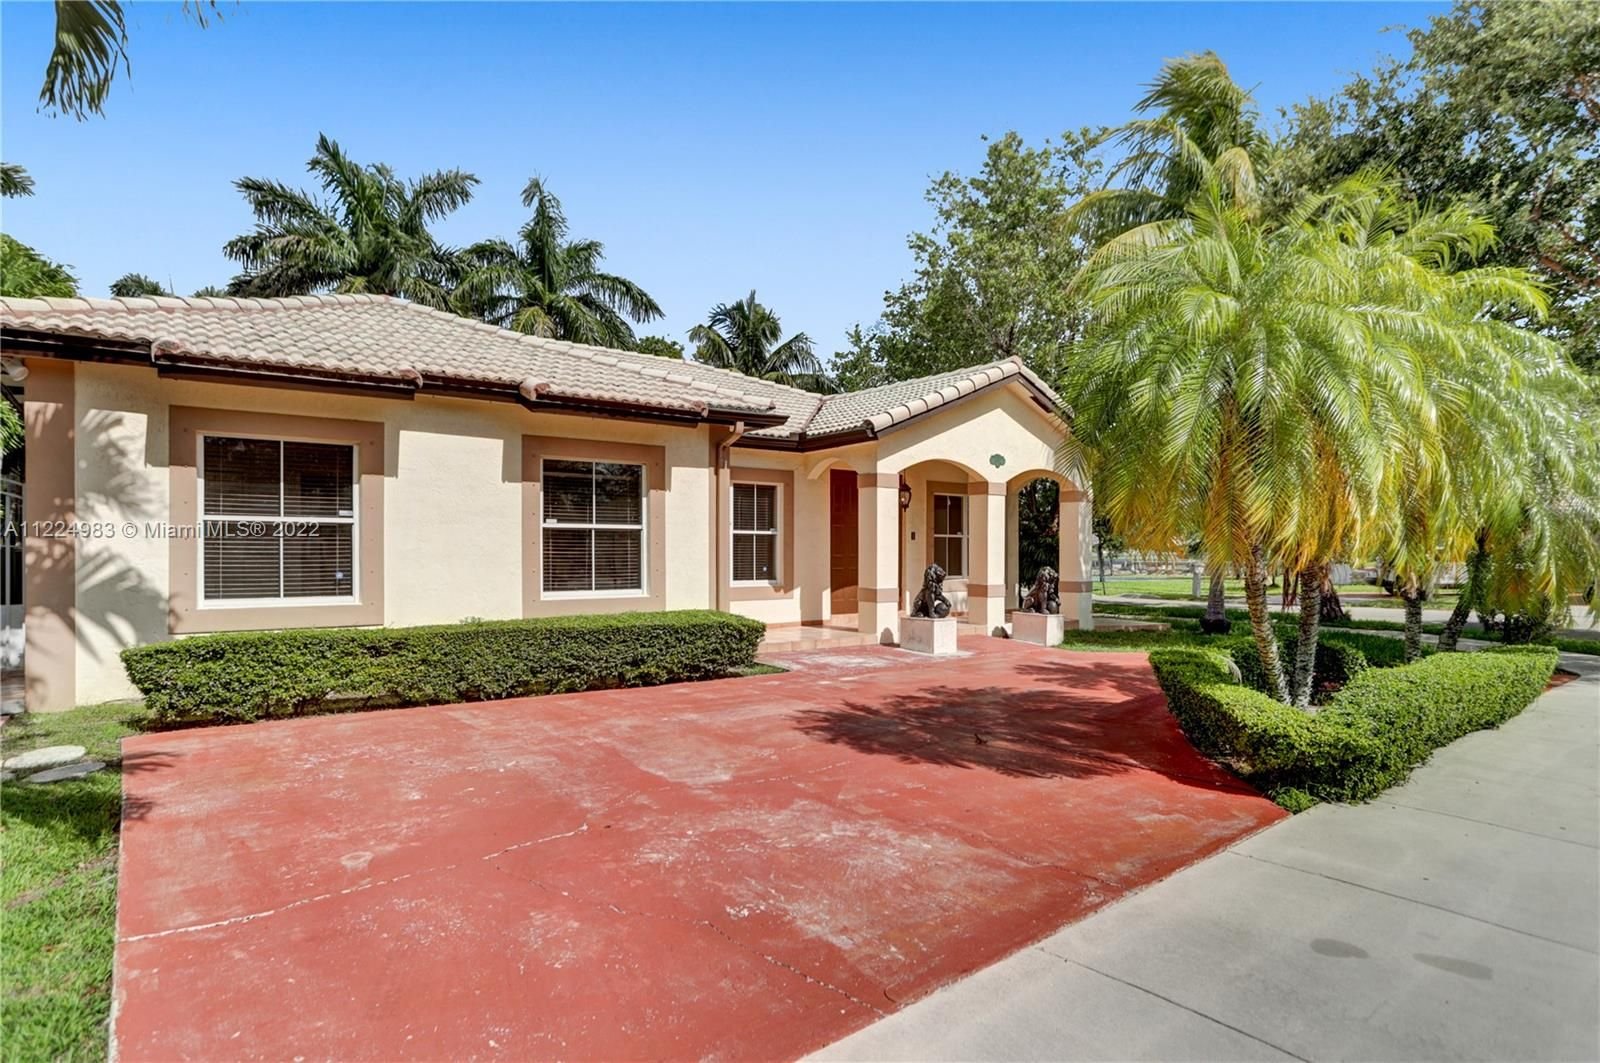 Real estate property located at 16912 88th Path, Miami-Dade County, Miami Lakes, FL